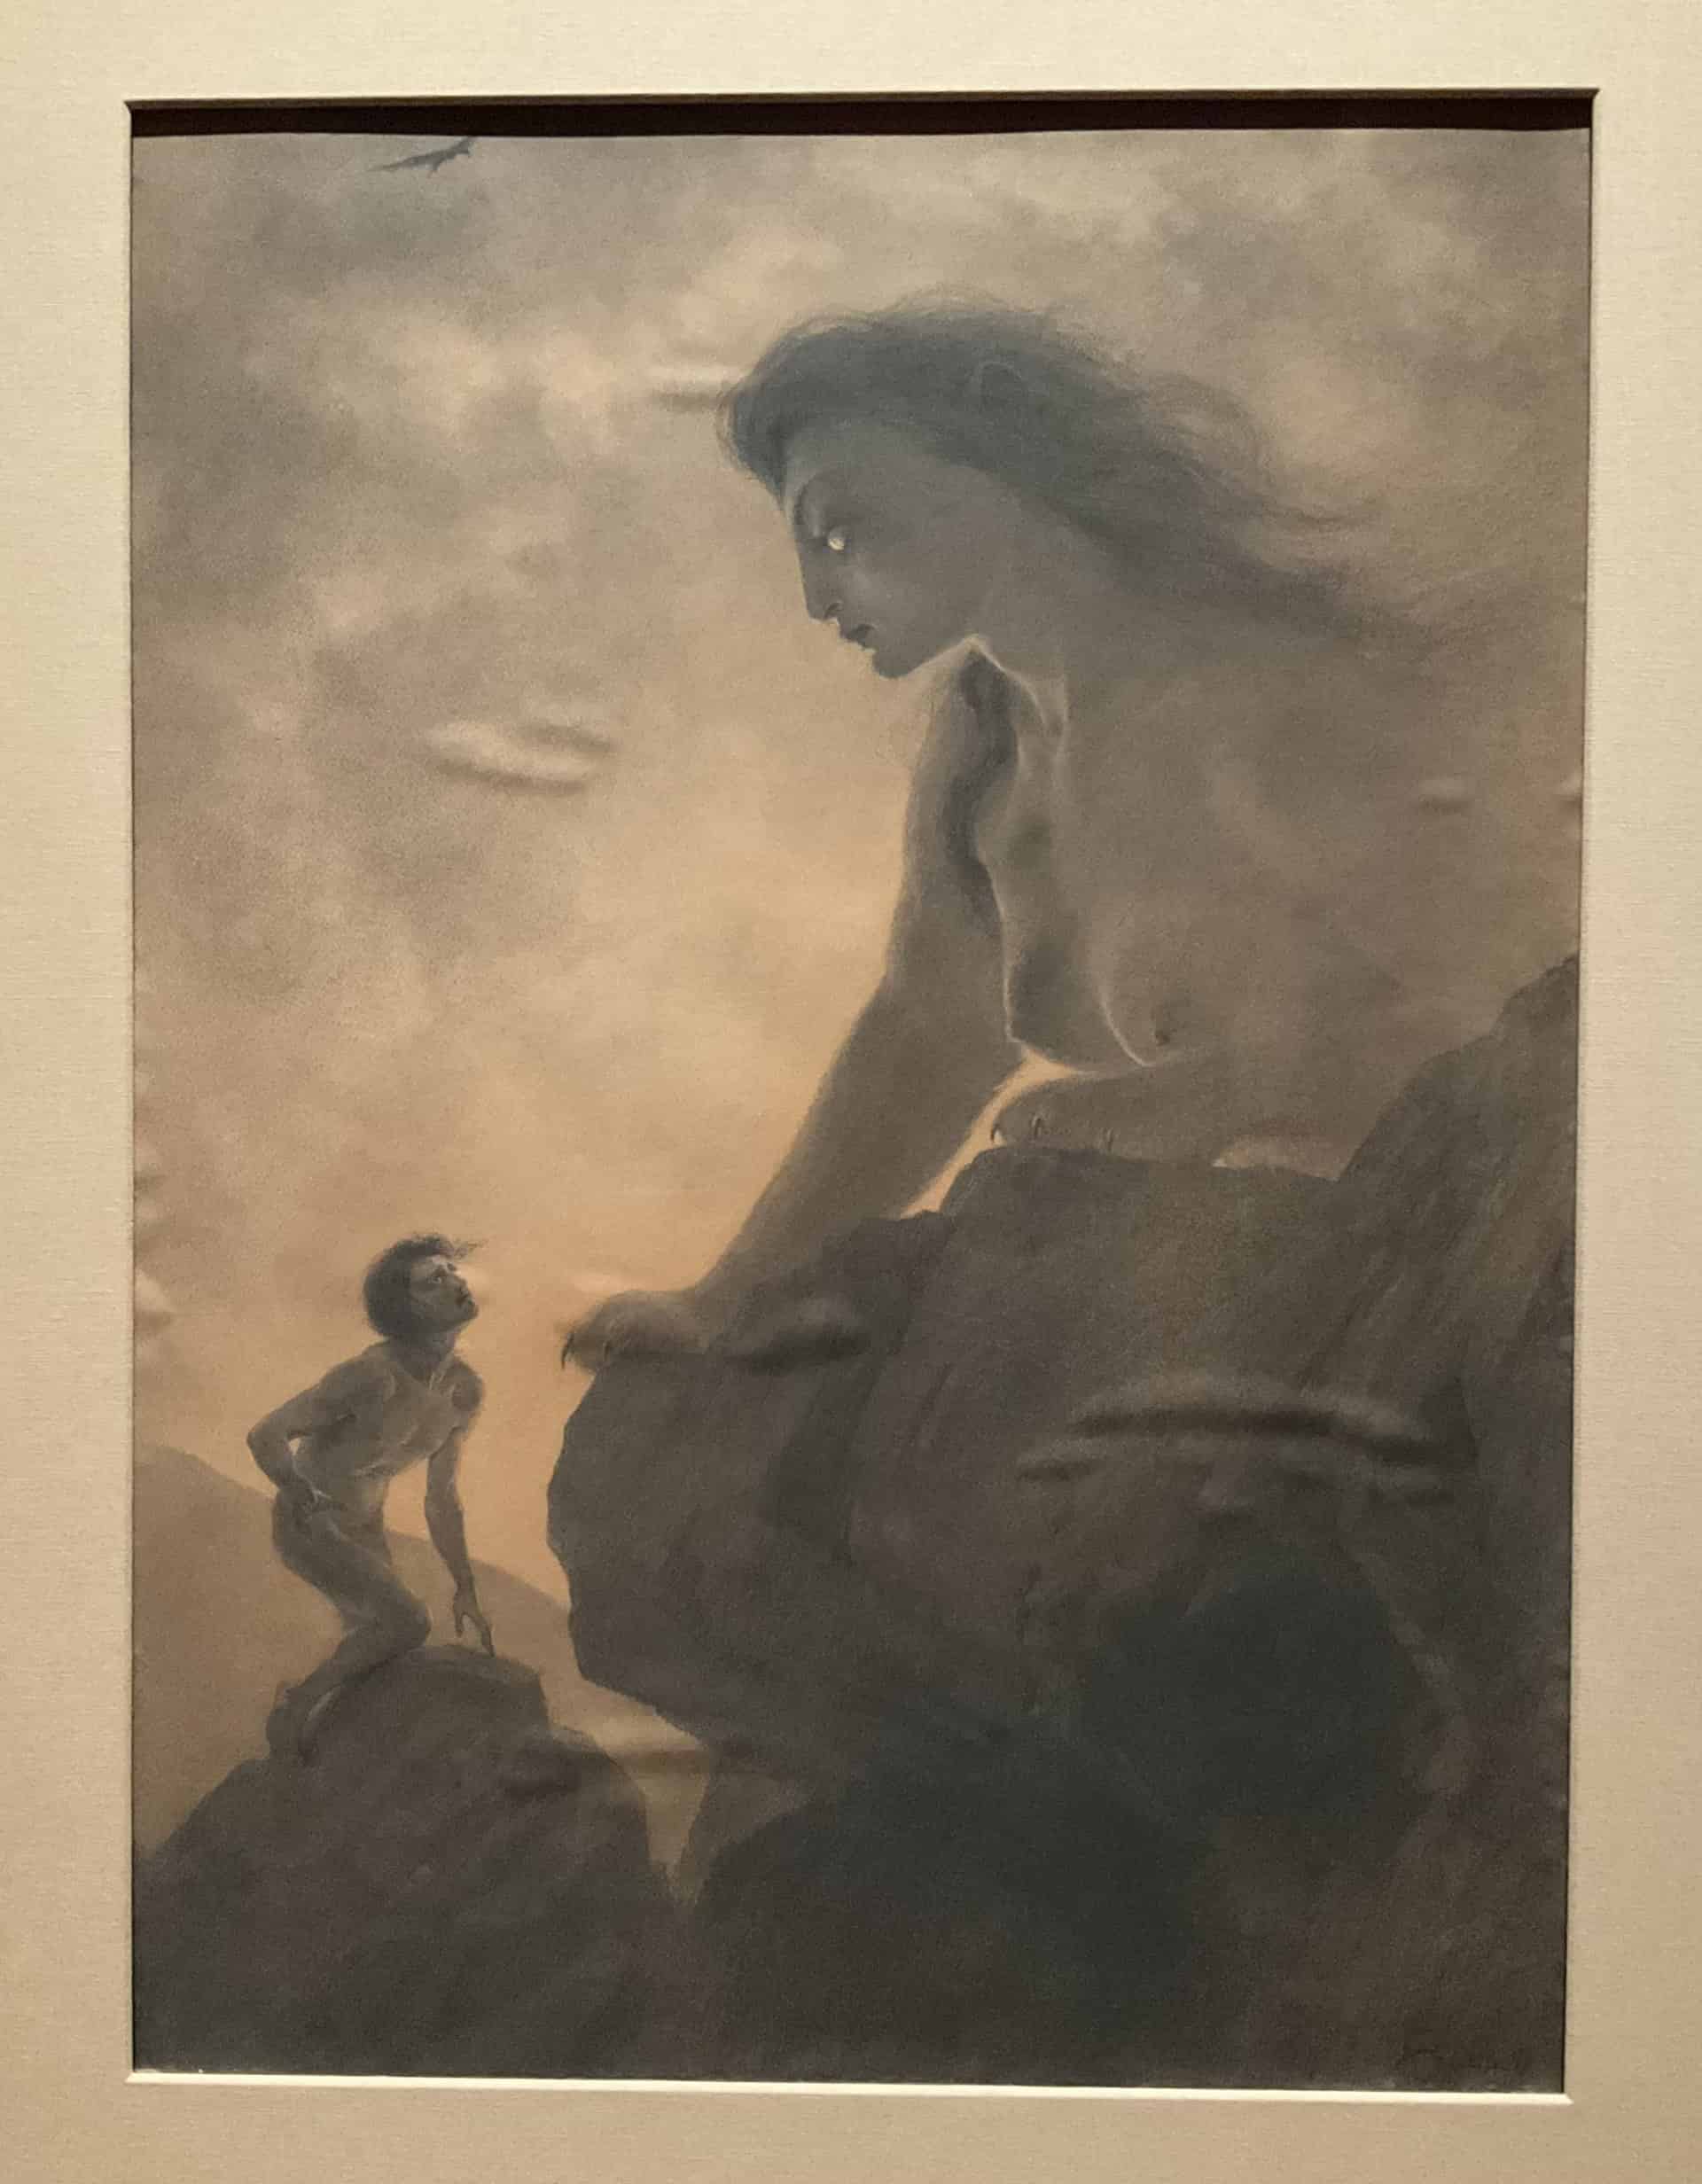 Hugo Höppener (Fidus) "Sphinx of Life", 1891 at the Leopold Museum. Photo by Julia Abramova, 2022